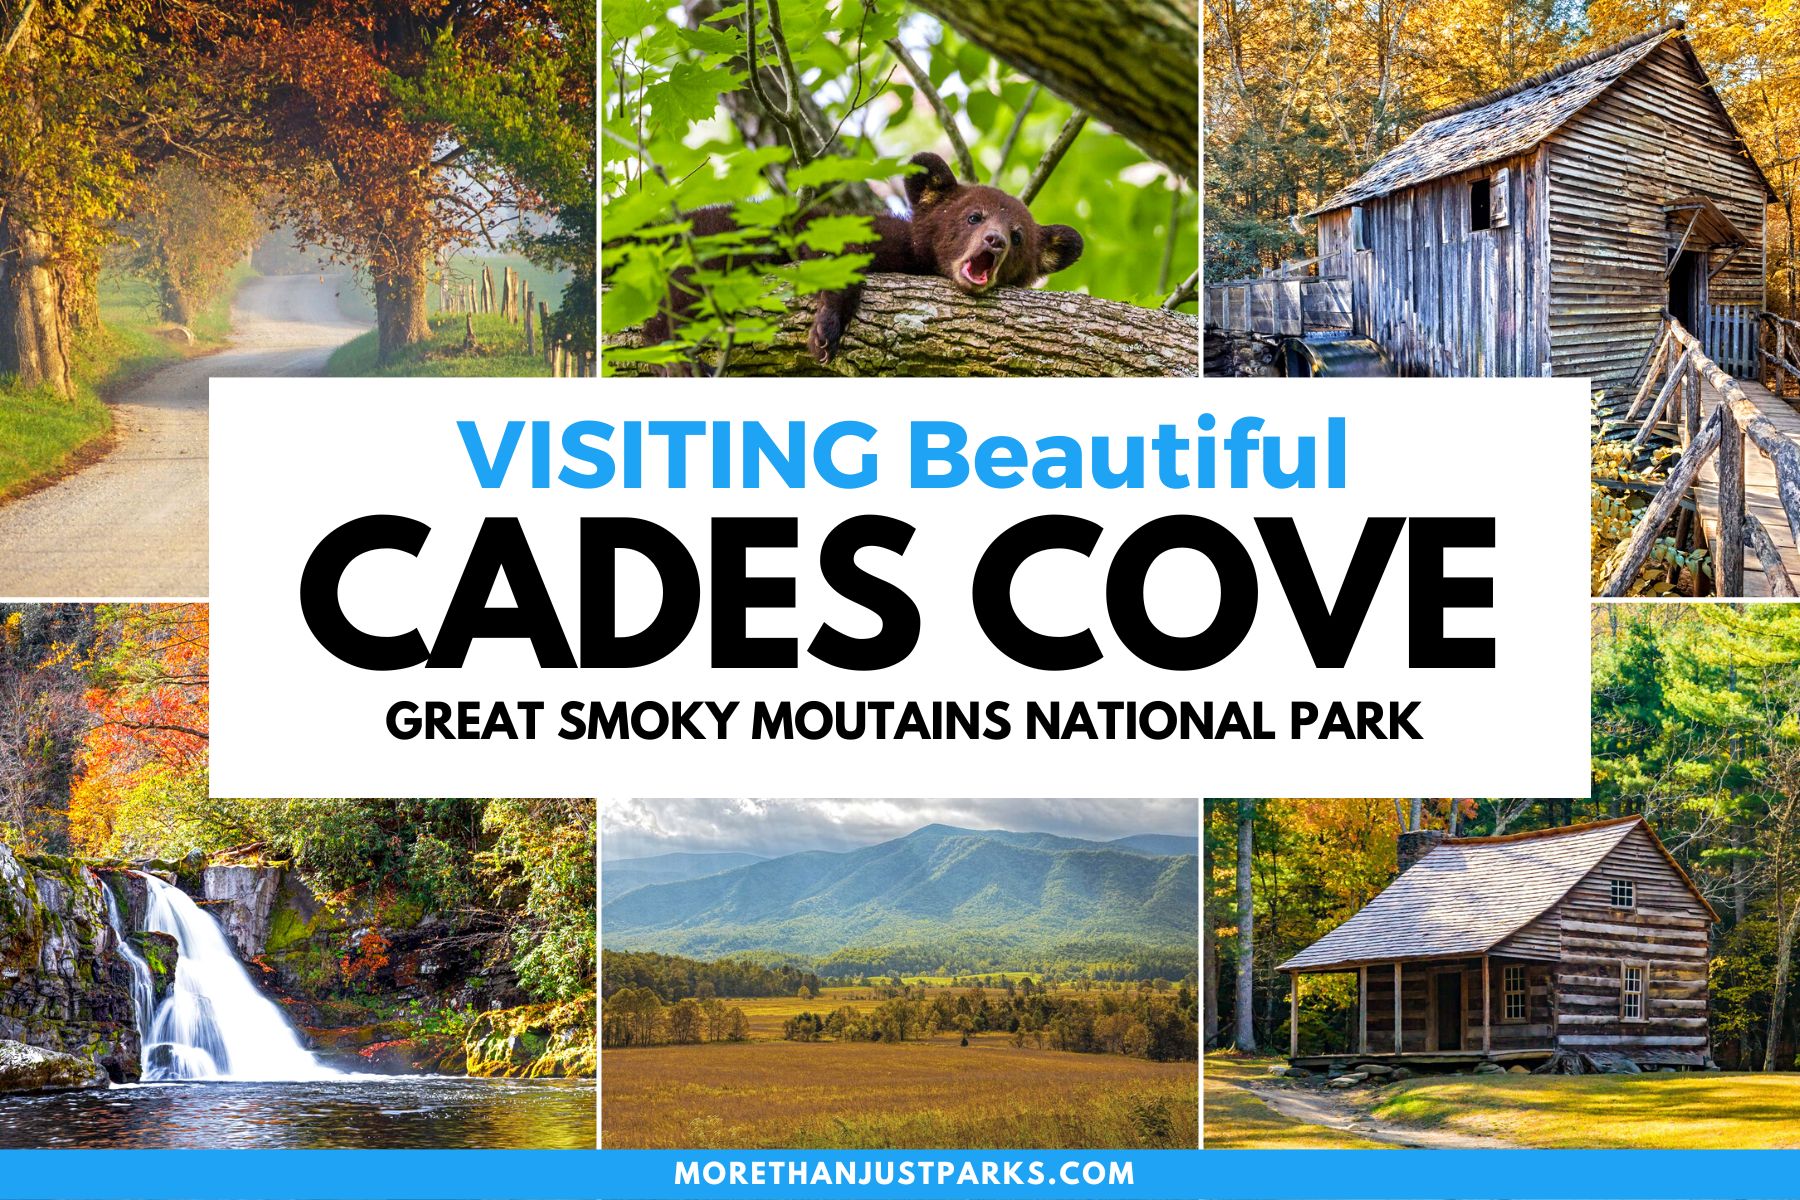 cades cove, great smoky mountains national park, visiting cades cove, thigns to do cades cove